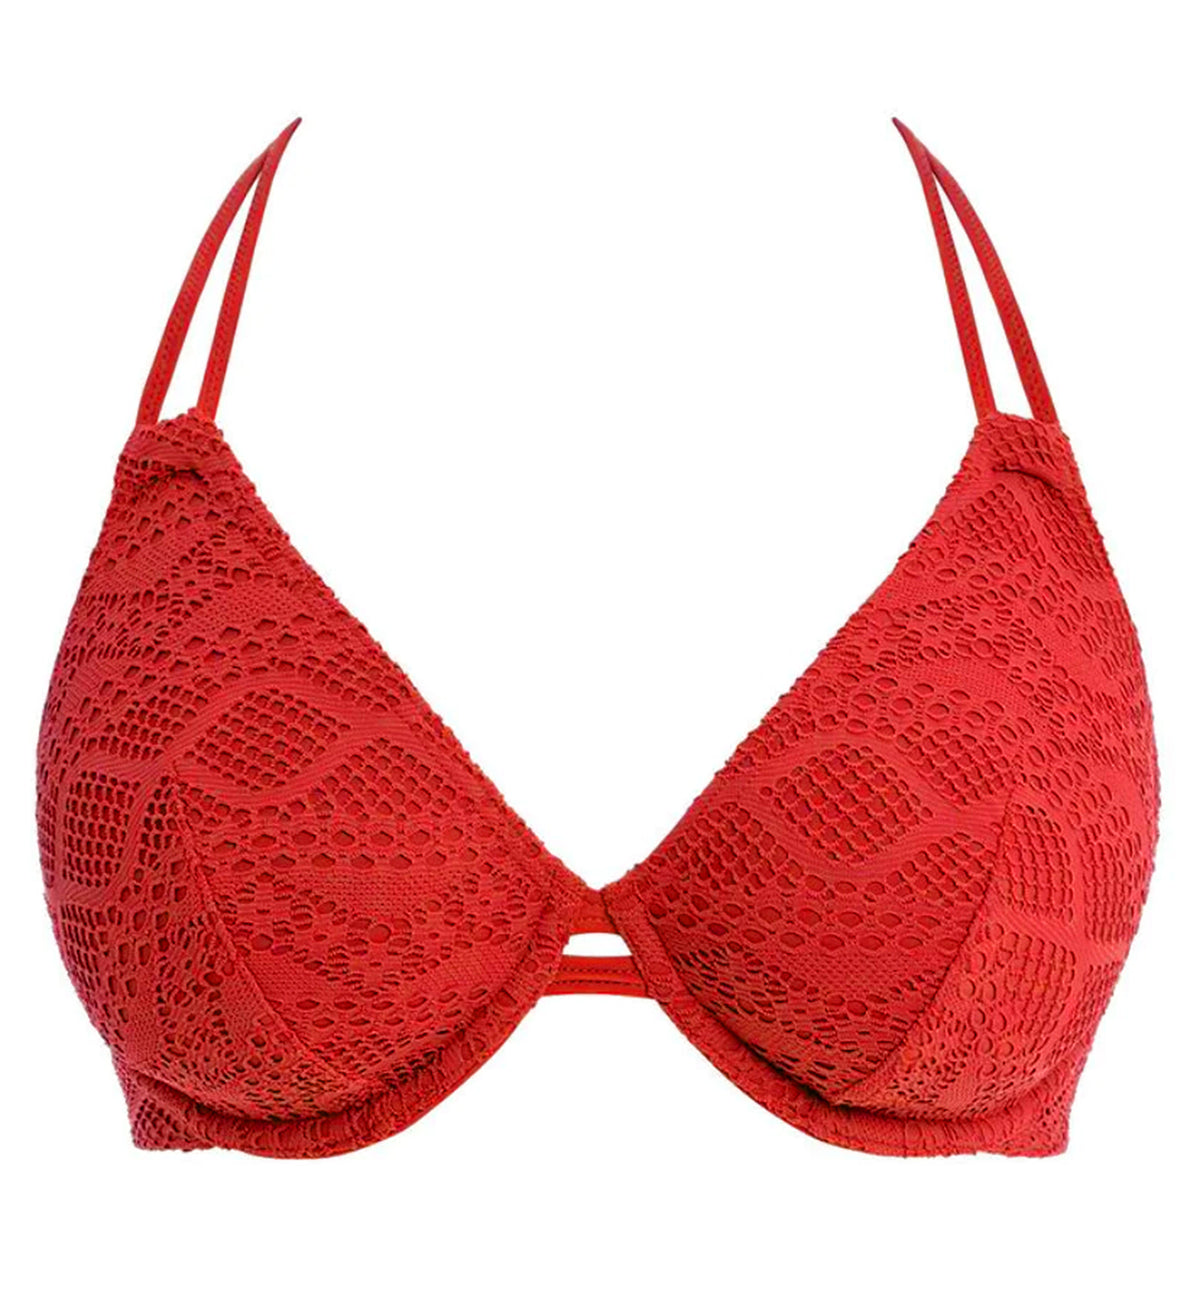 Freya Sundance Bandless Underwire Halter Bikini Top (3971),30DD,Red - Red,30DD